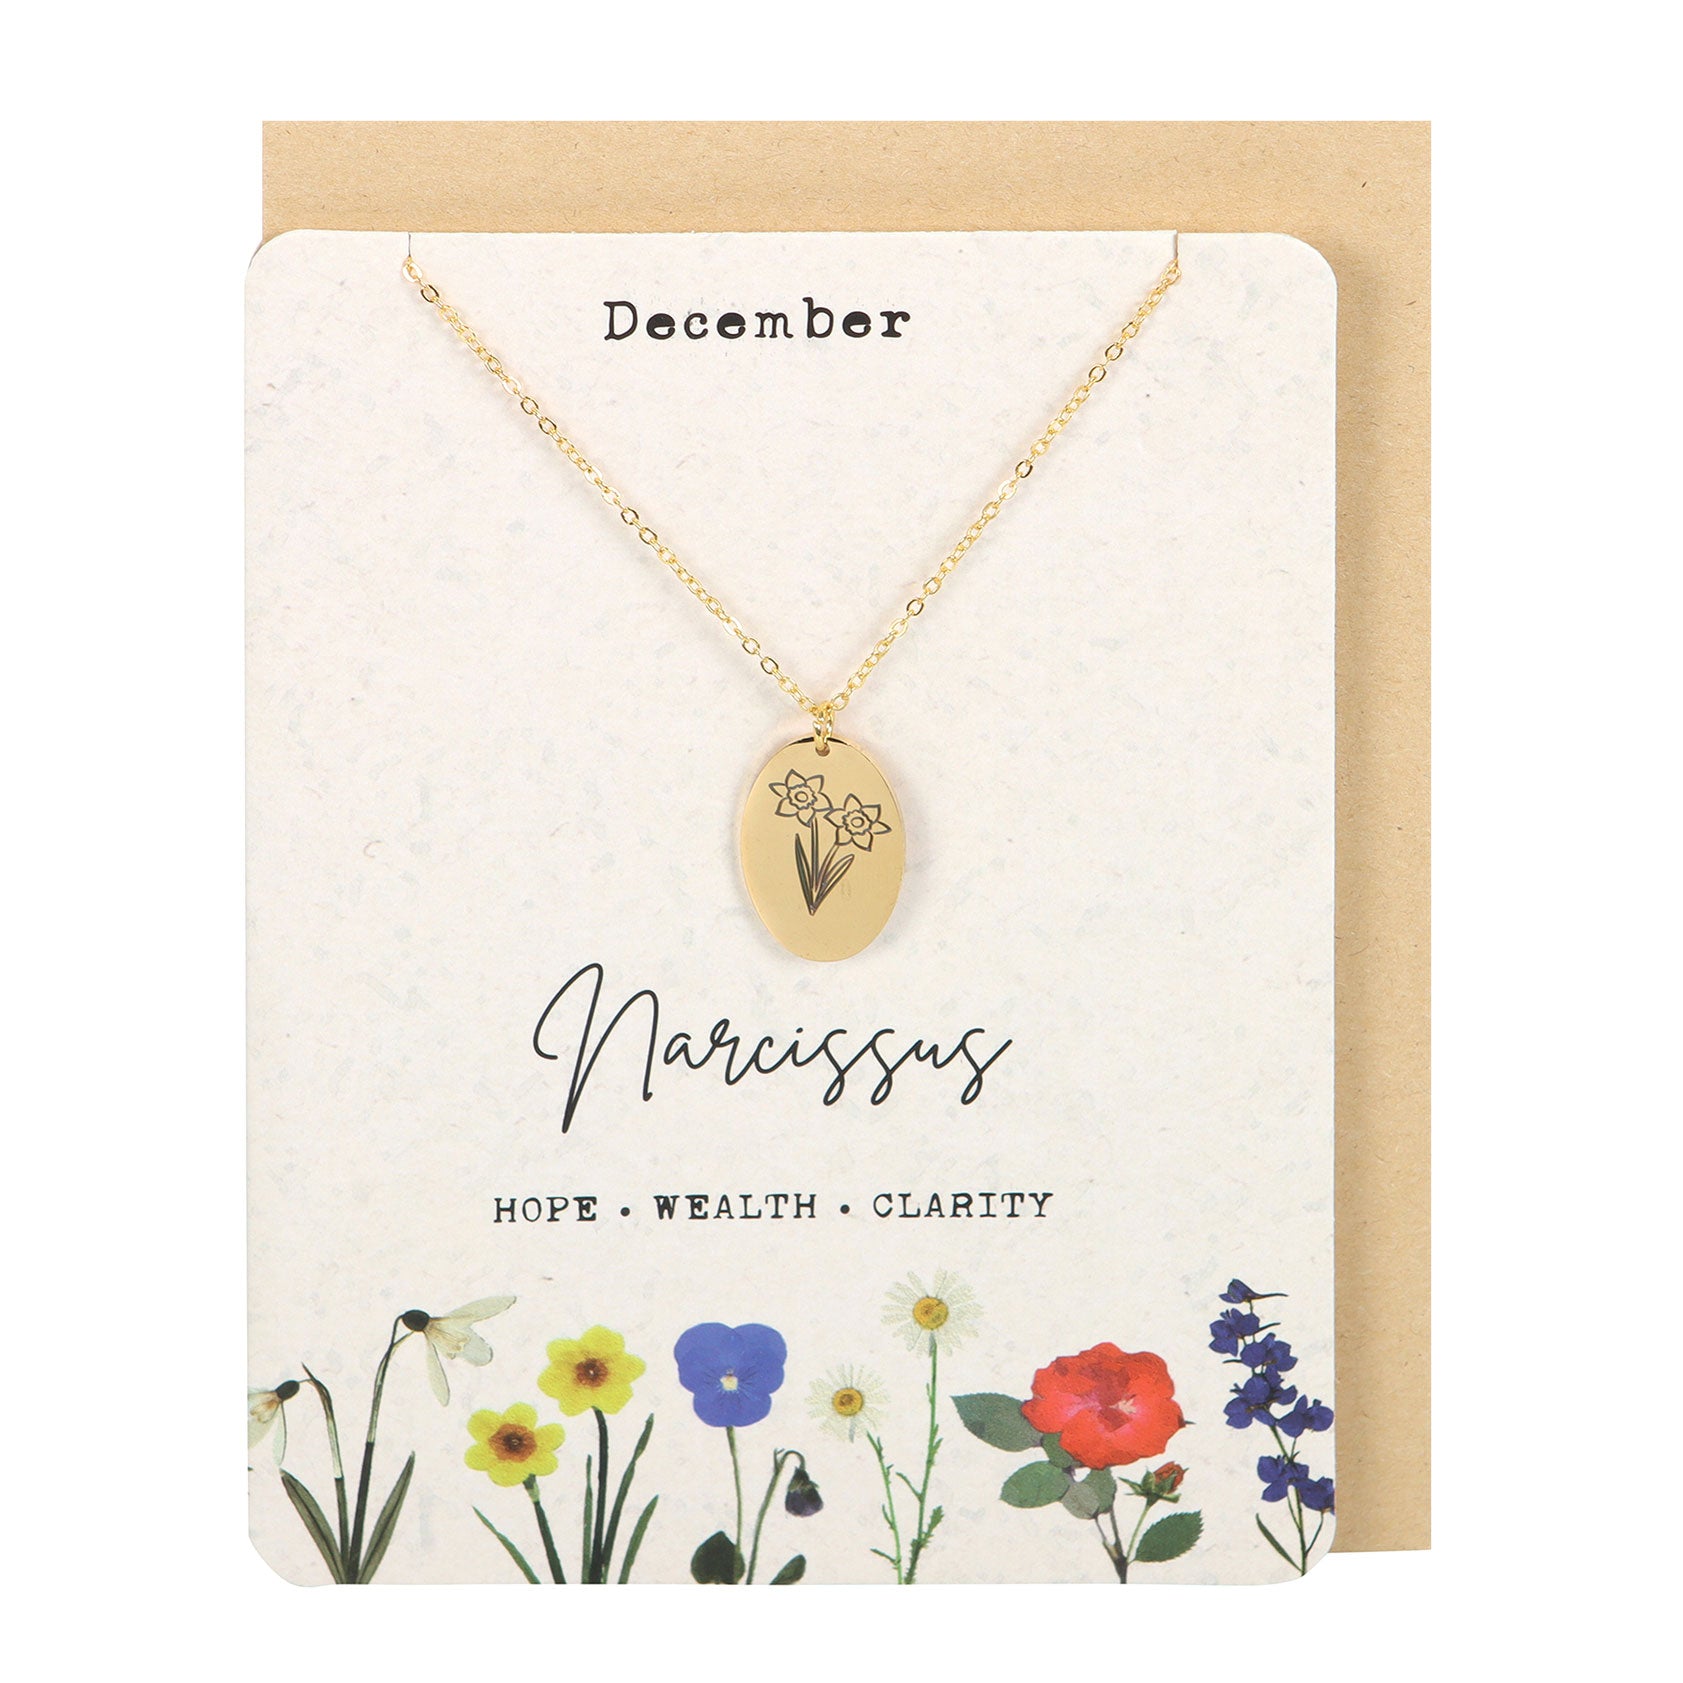 View December Narcissus Birth Flower Necklace Card information